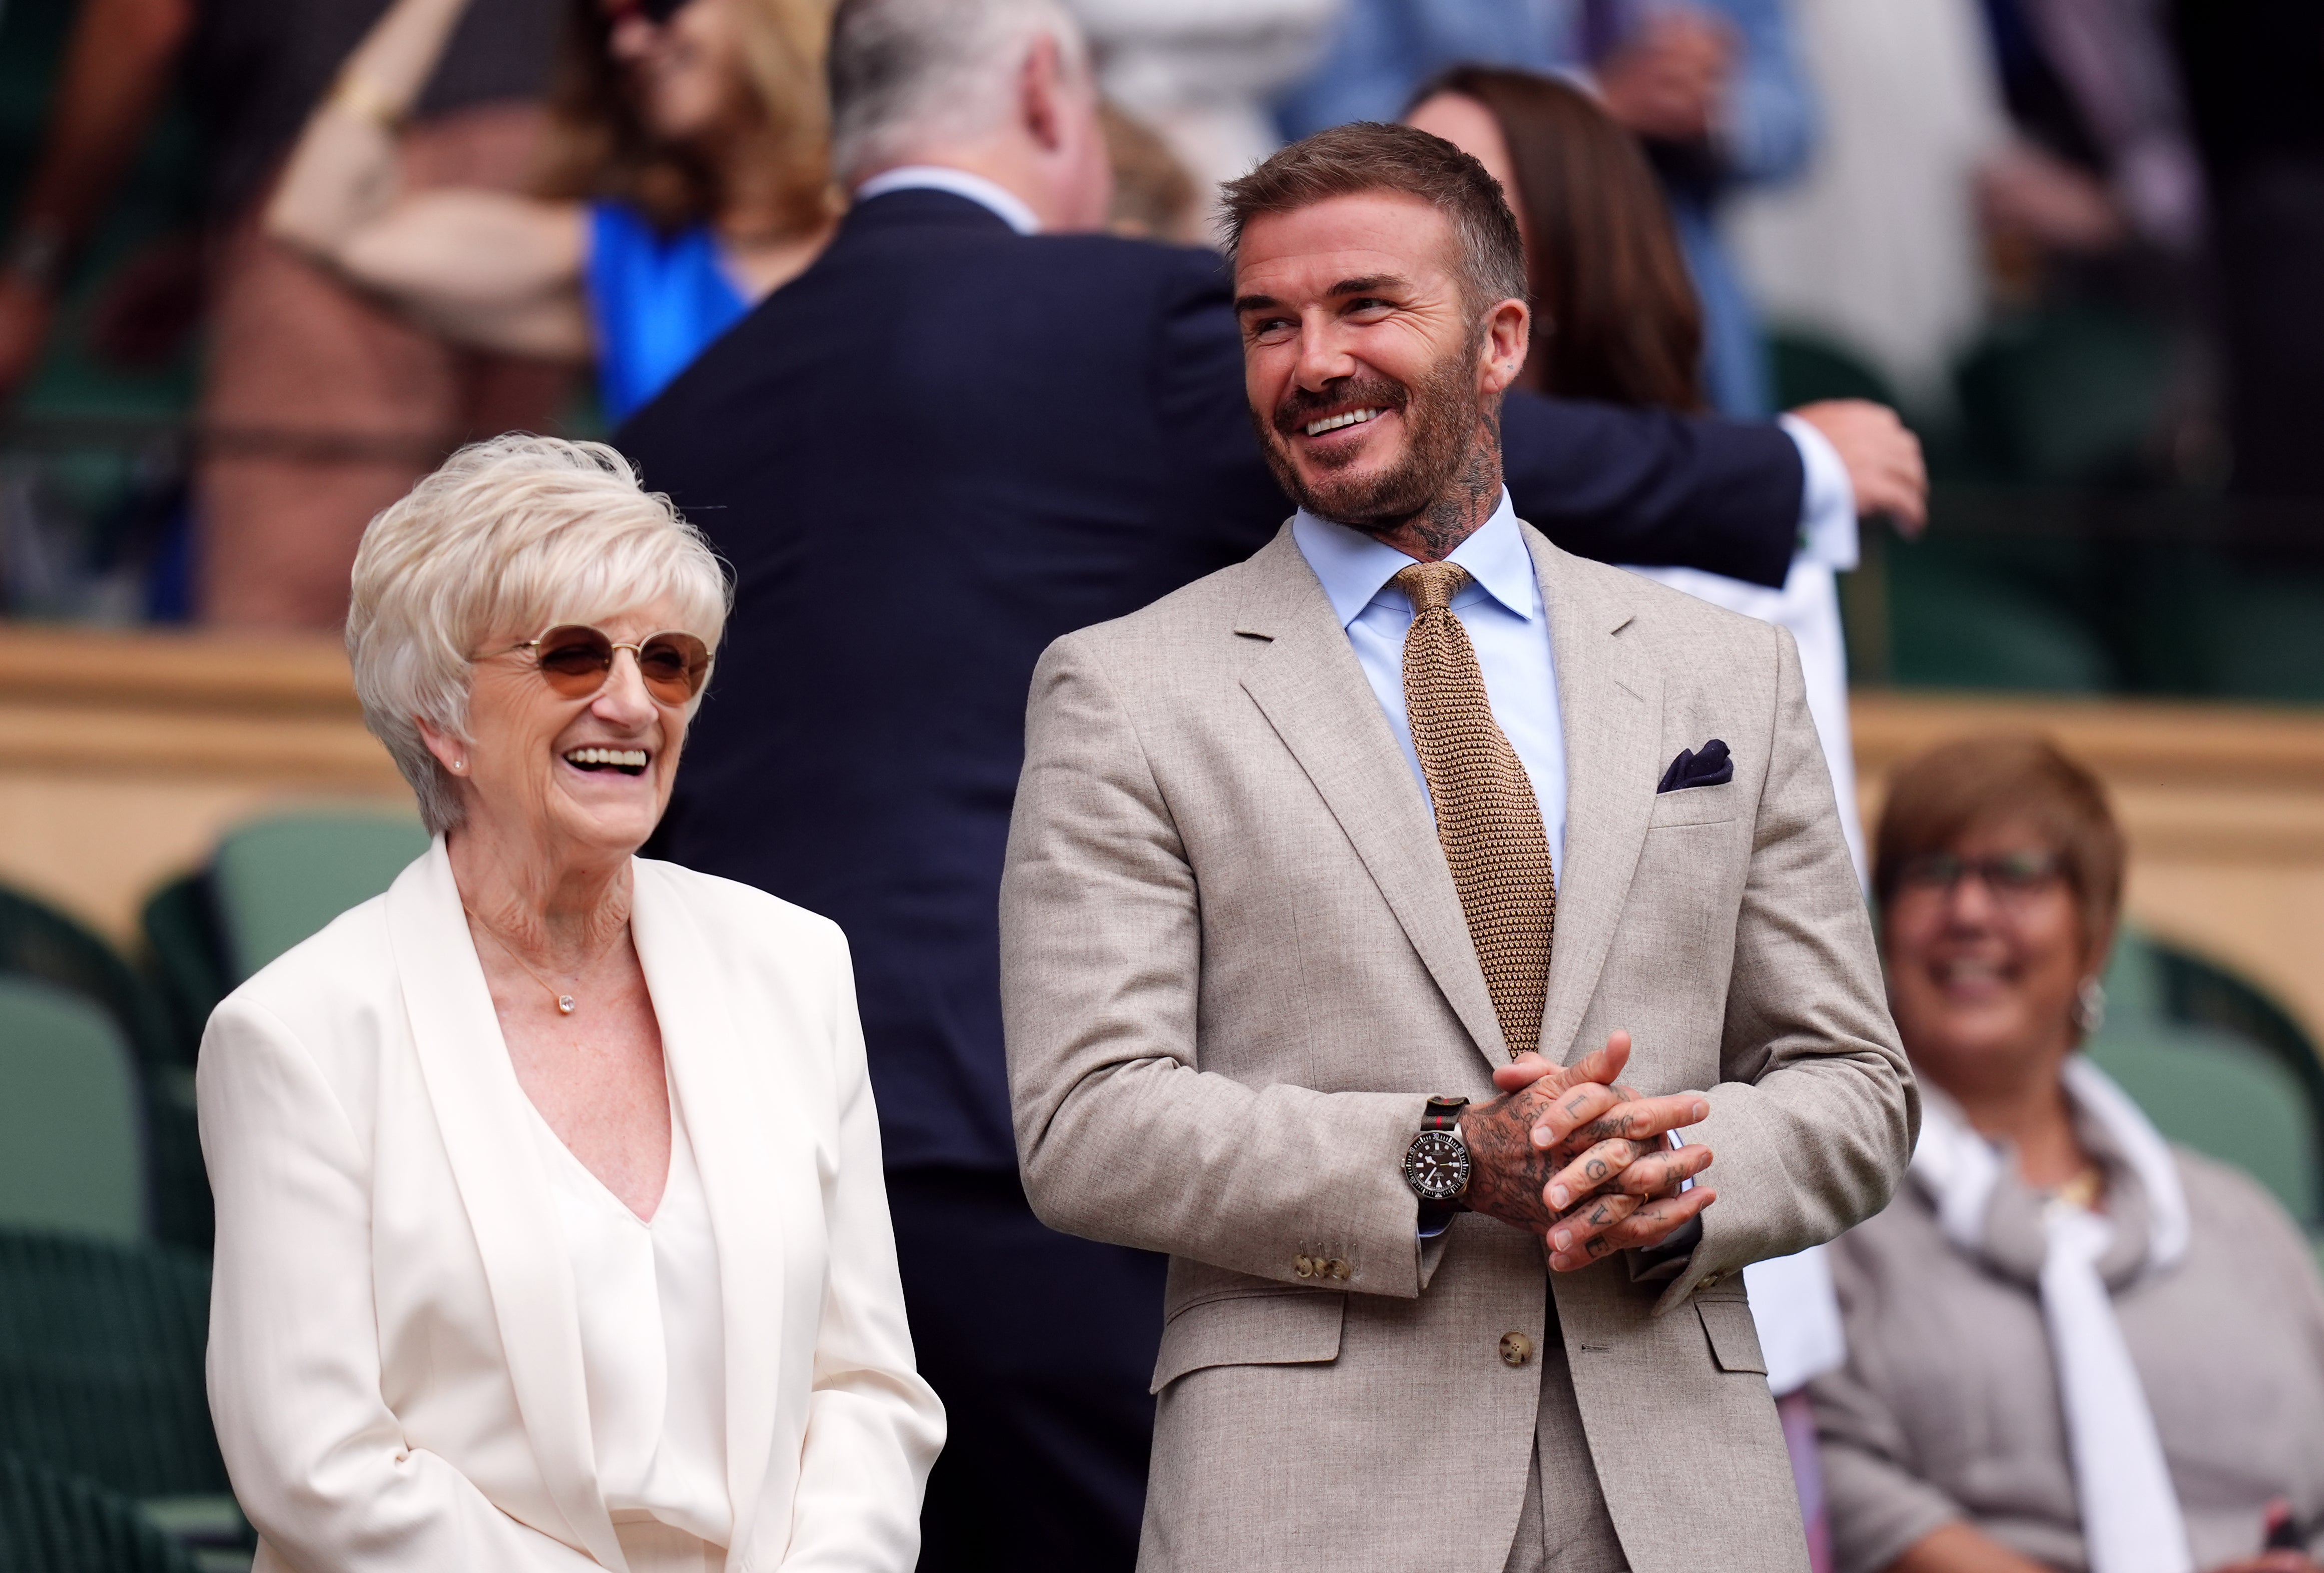 David Beckham was in attendance with his mum Sandra